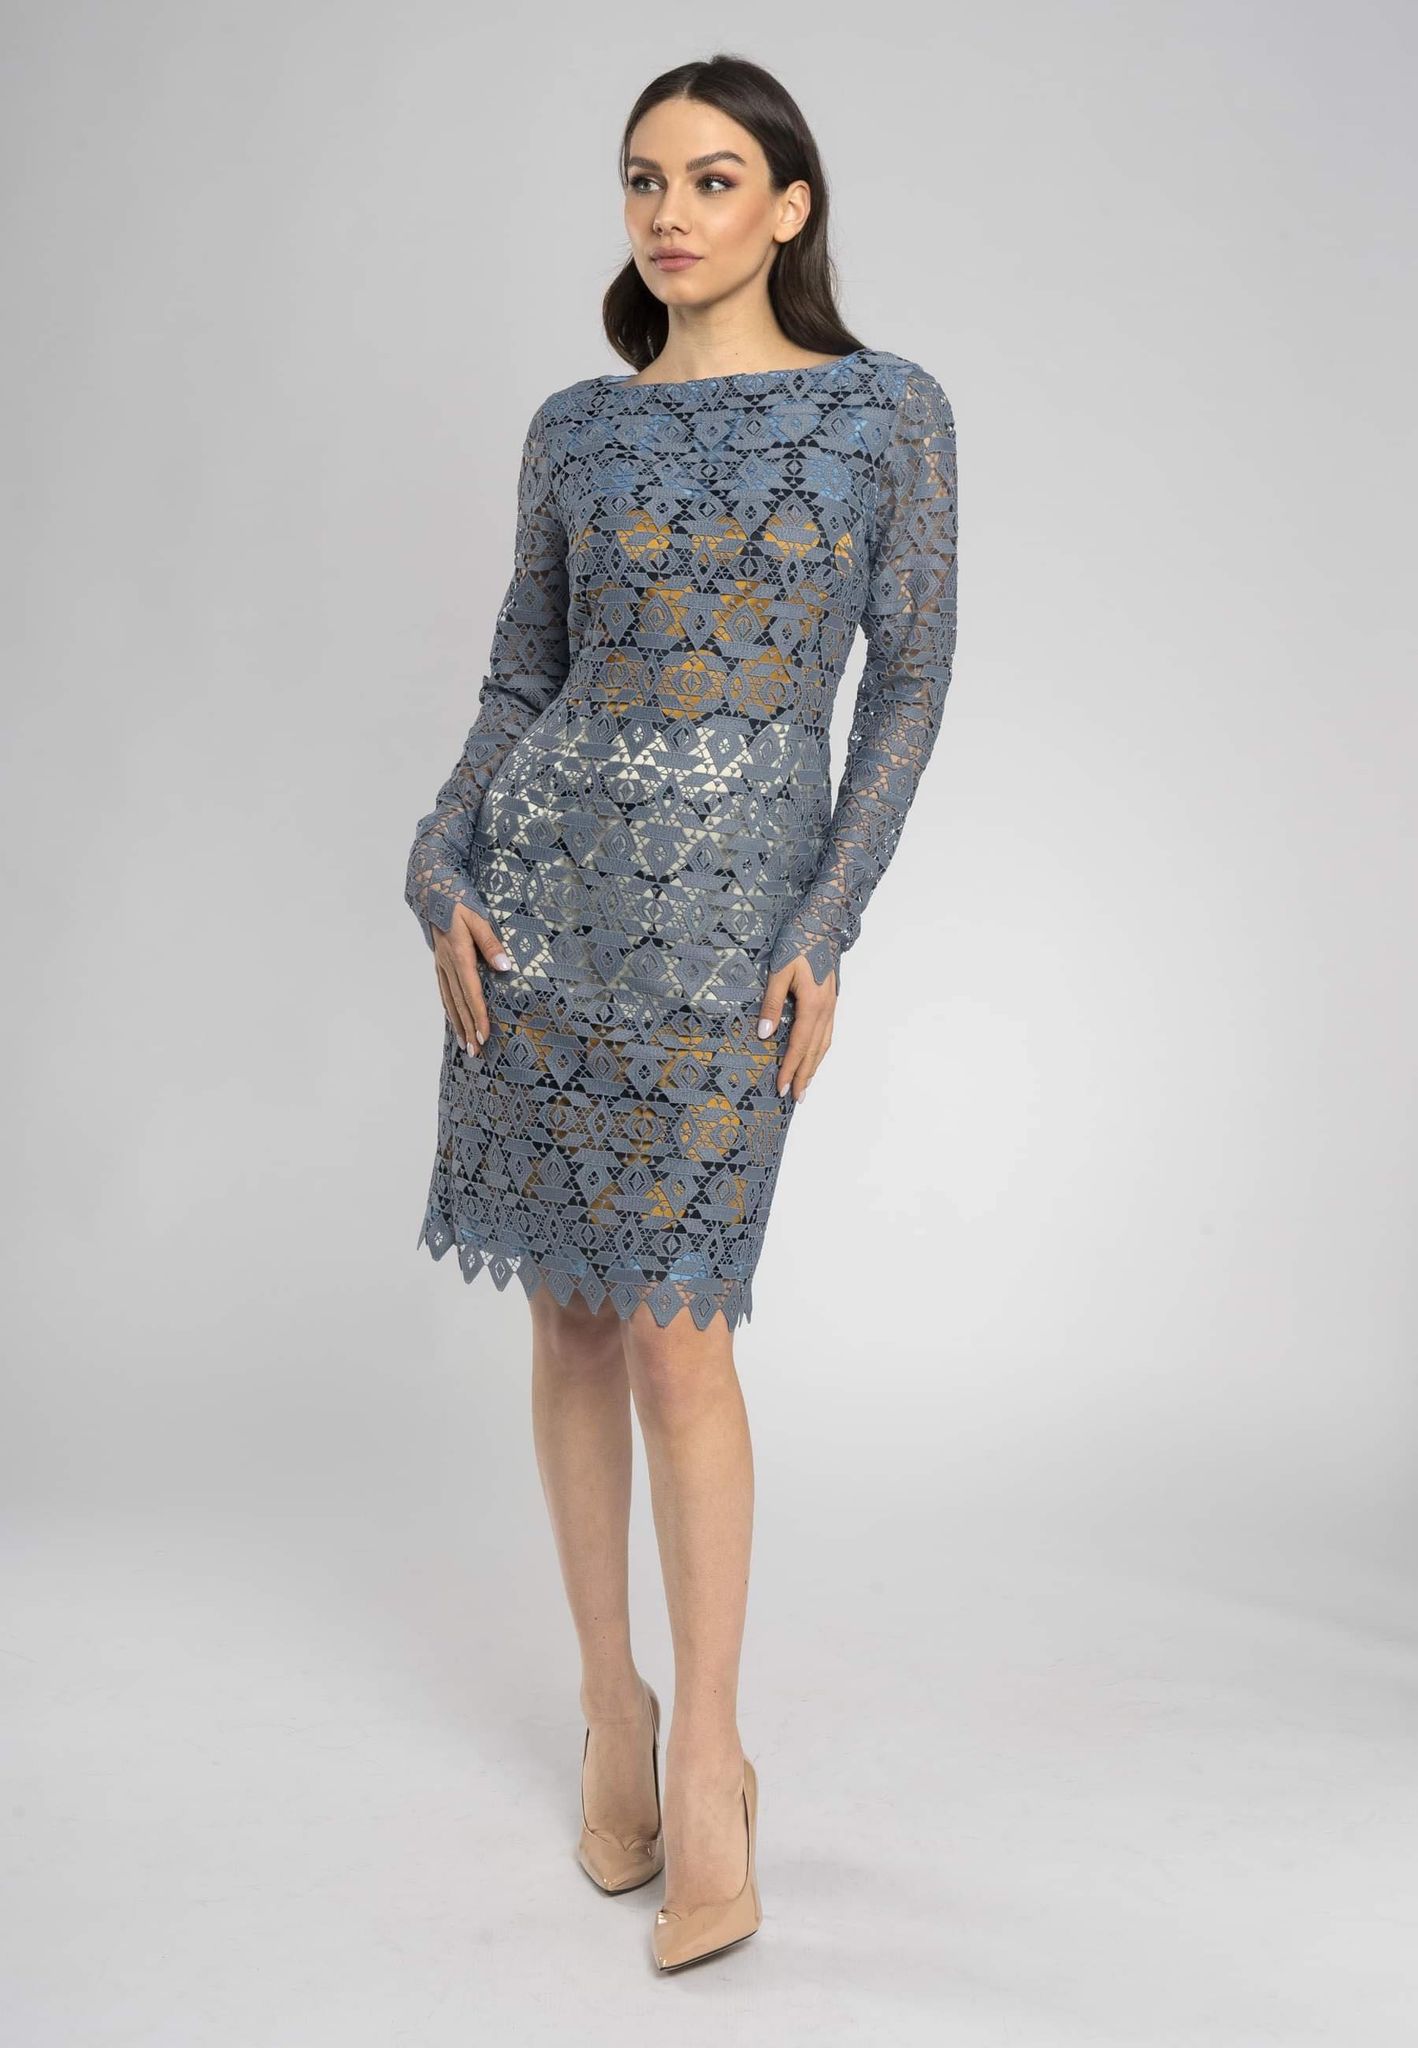 Italian lace sheath dress, modern feminine dress, elegant lace overlay dress, high-fashion dress, stylish floral lace dress